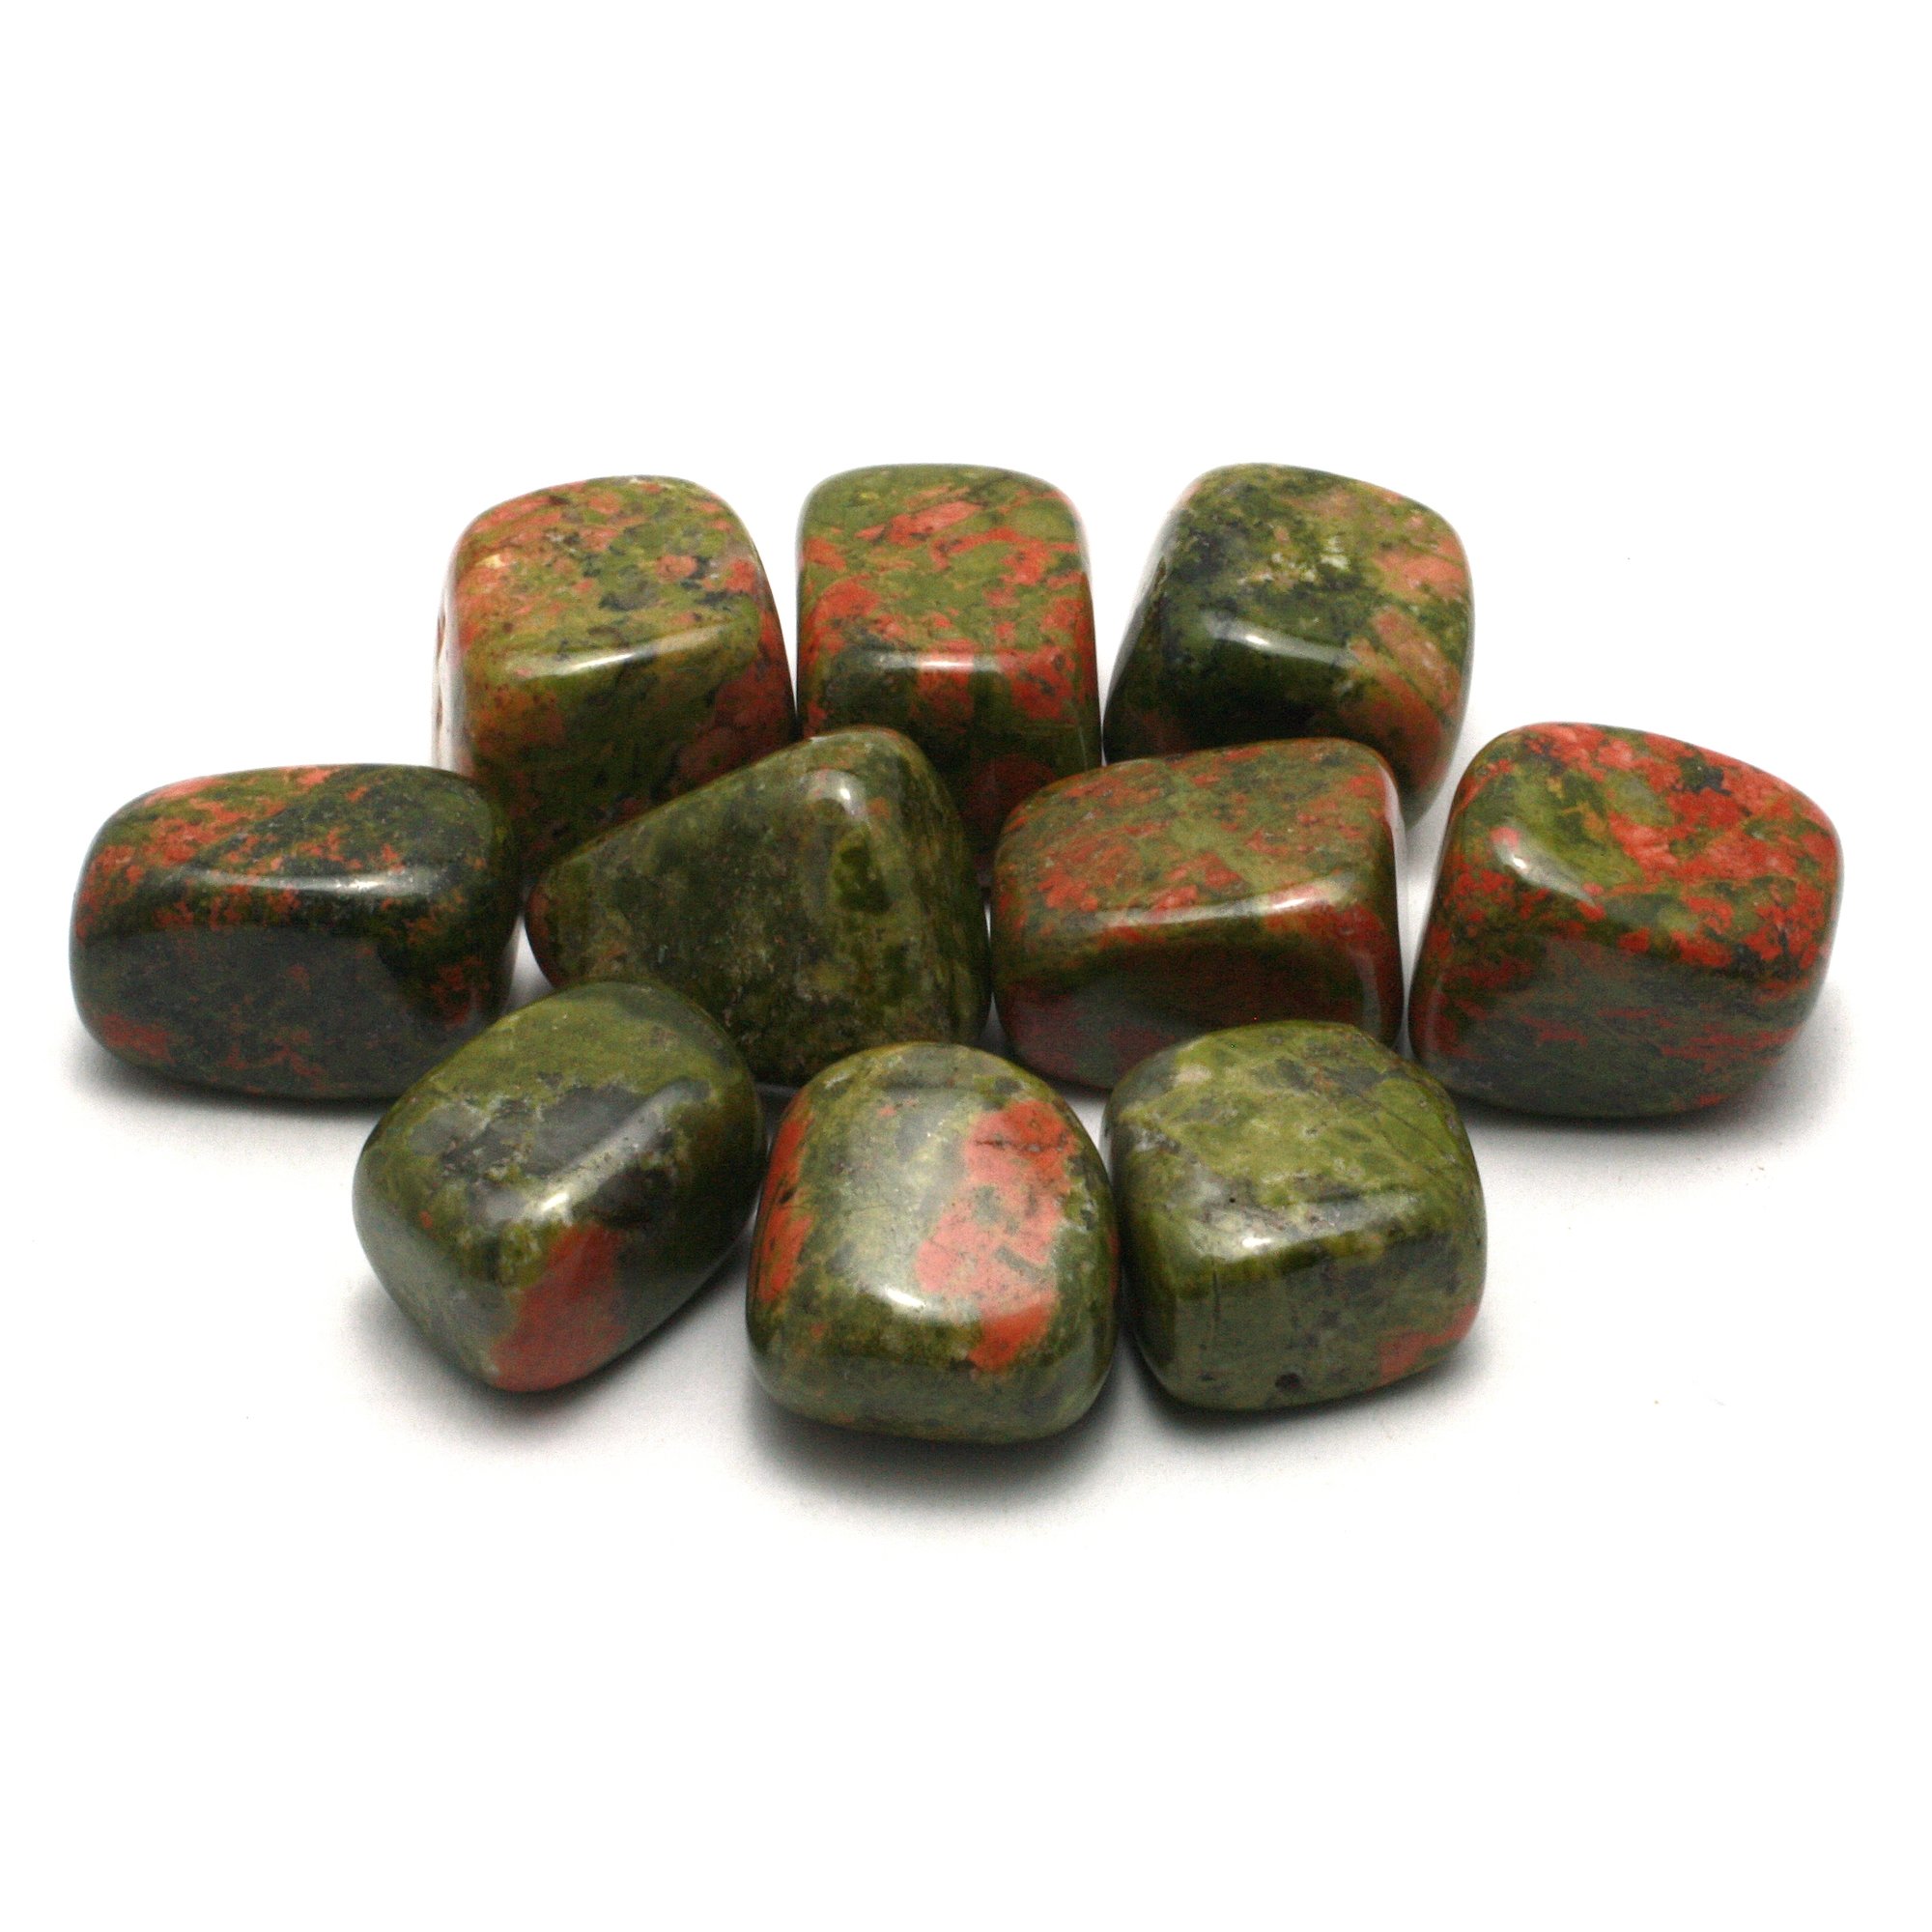 Unakite  Tumble Stones (20-25mm)